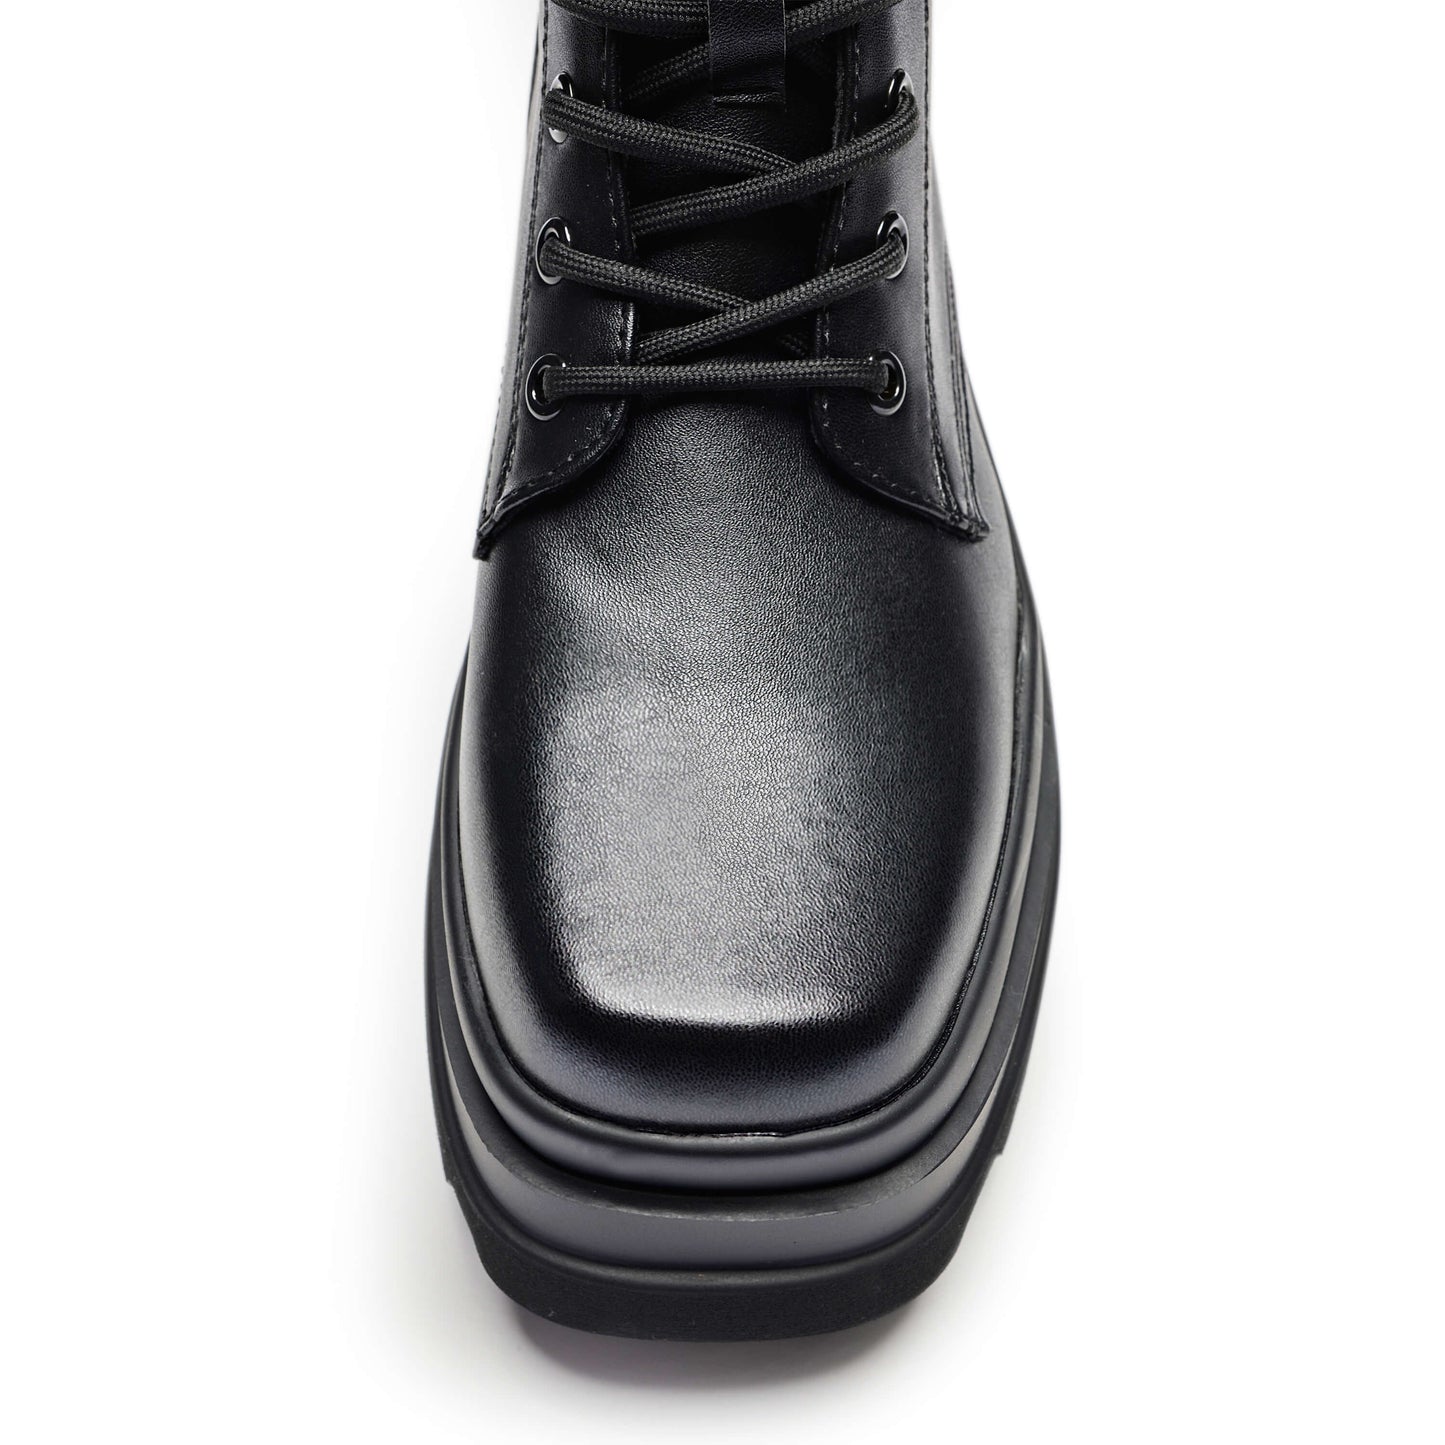 Deathwatch Trident Platform Boots - Ankle Boots - KOI Footwear - Black - Top View